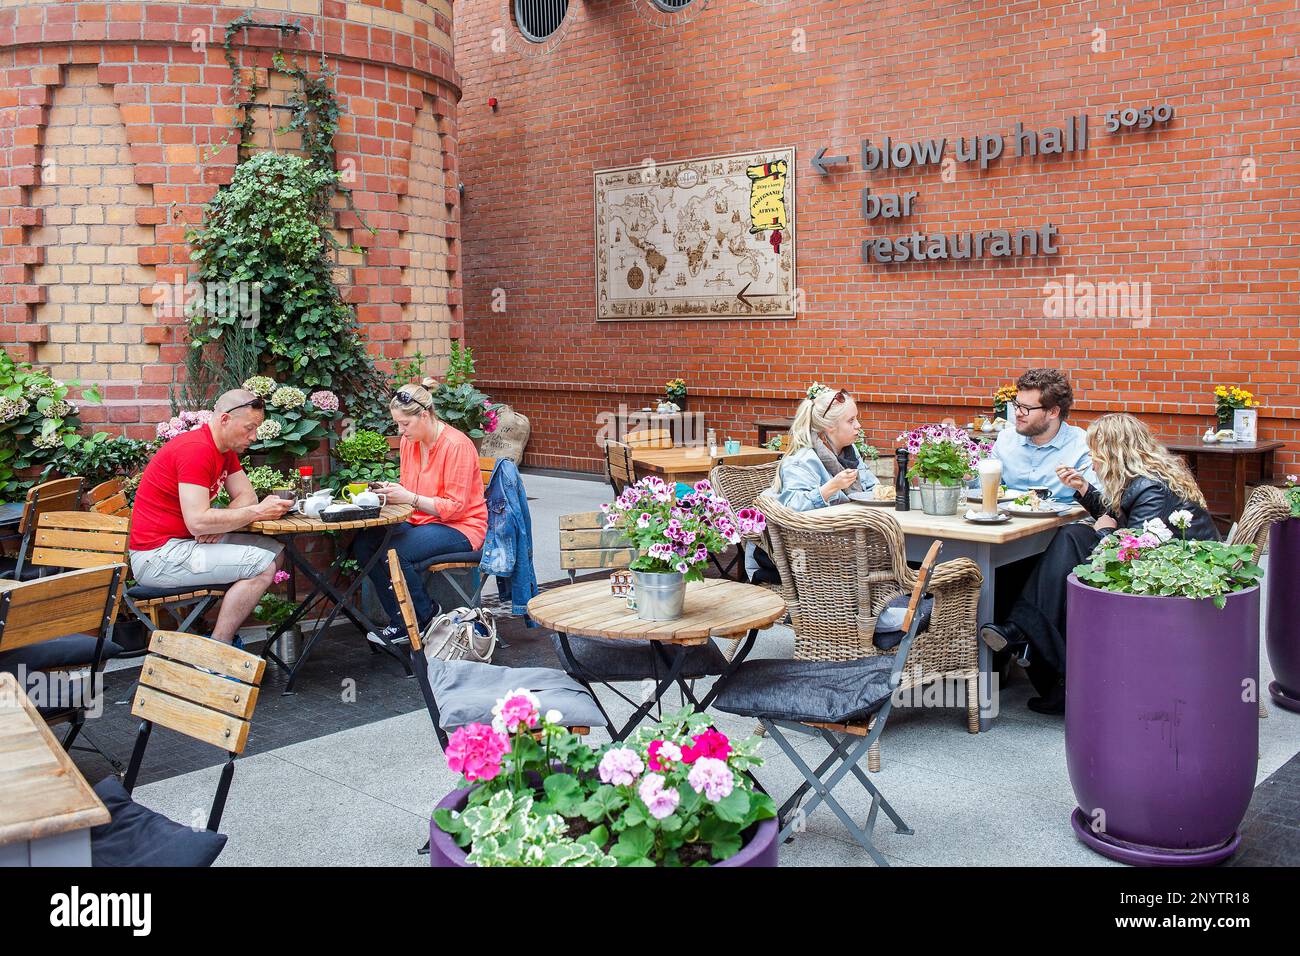 Fuori porta cafe in Old Brewery, Stary Browar, moderno centro commerciale, Poznan, Wielkopolska, Polonia, l'Europa. Foto Stock